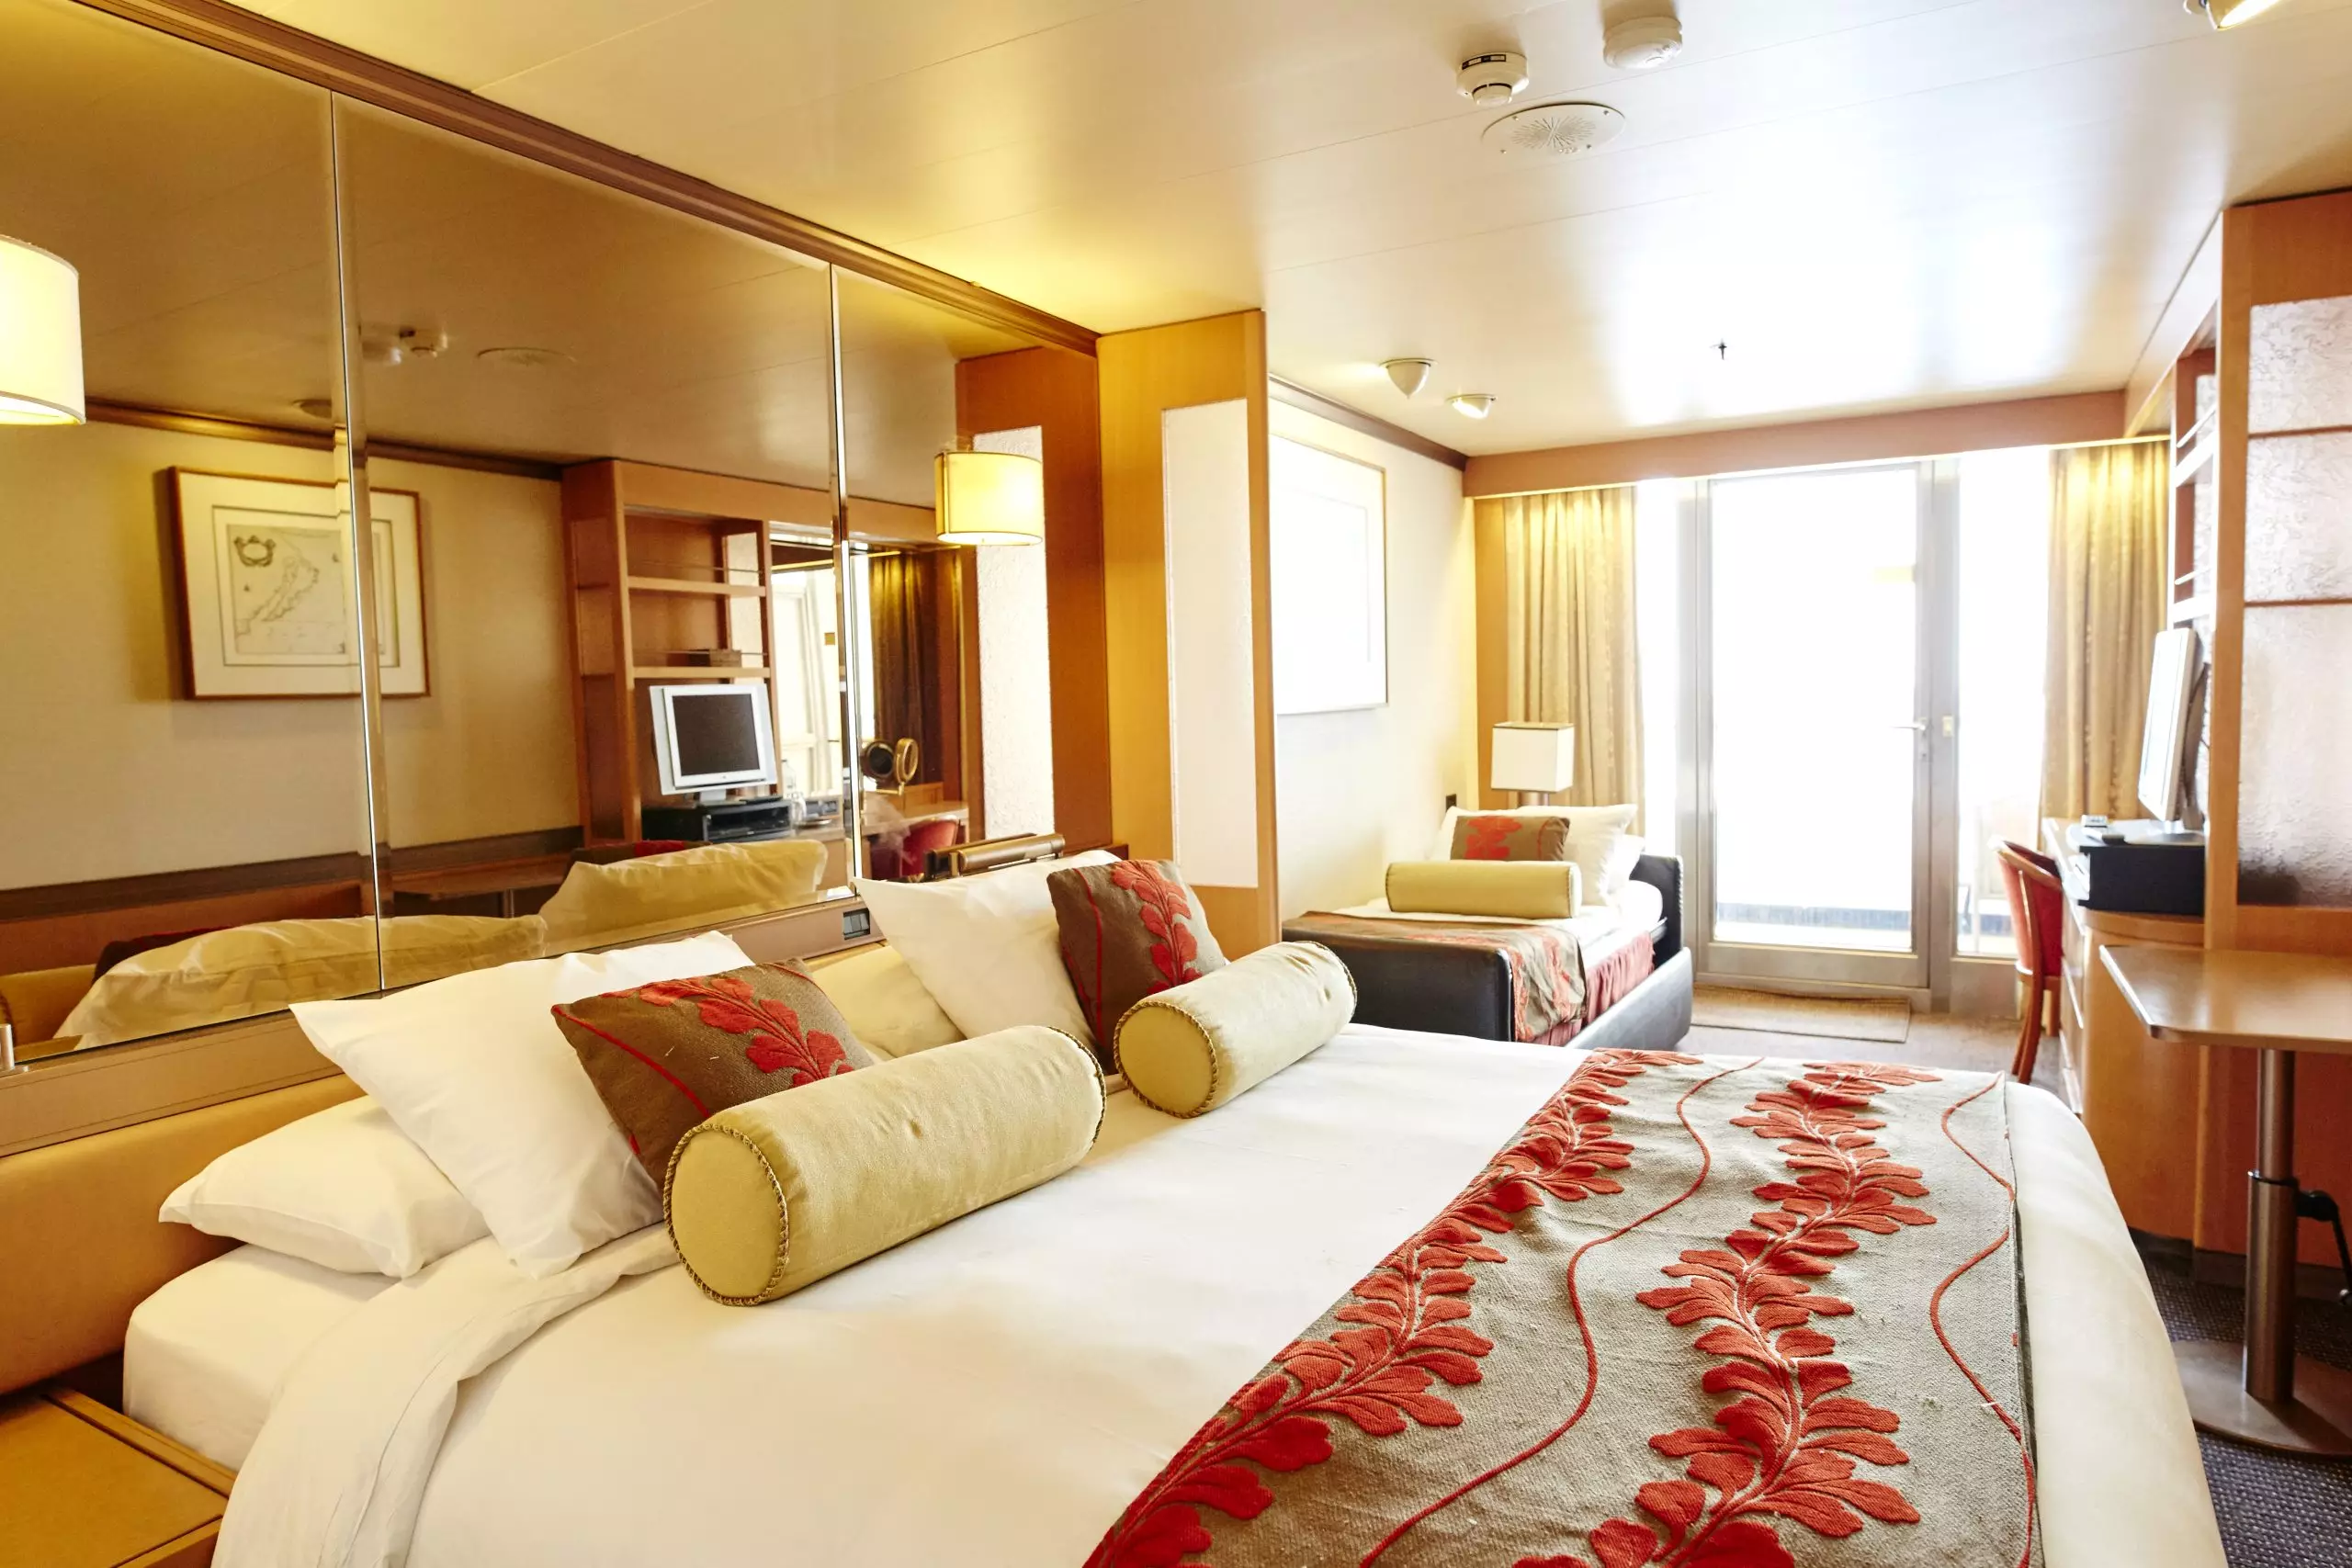 Journey Ship SJA balcony deck 9 SJC blacony deck 10 double bed and single sofa bed scaled.jpg